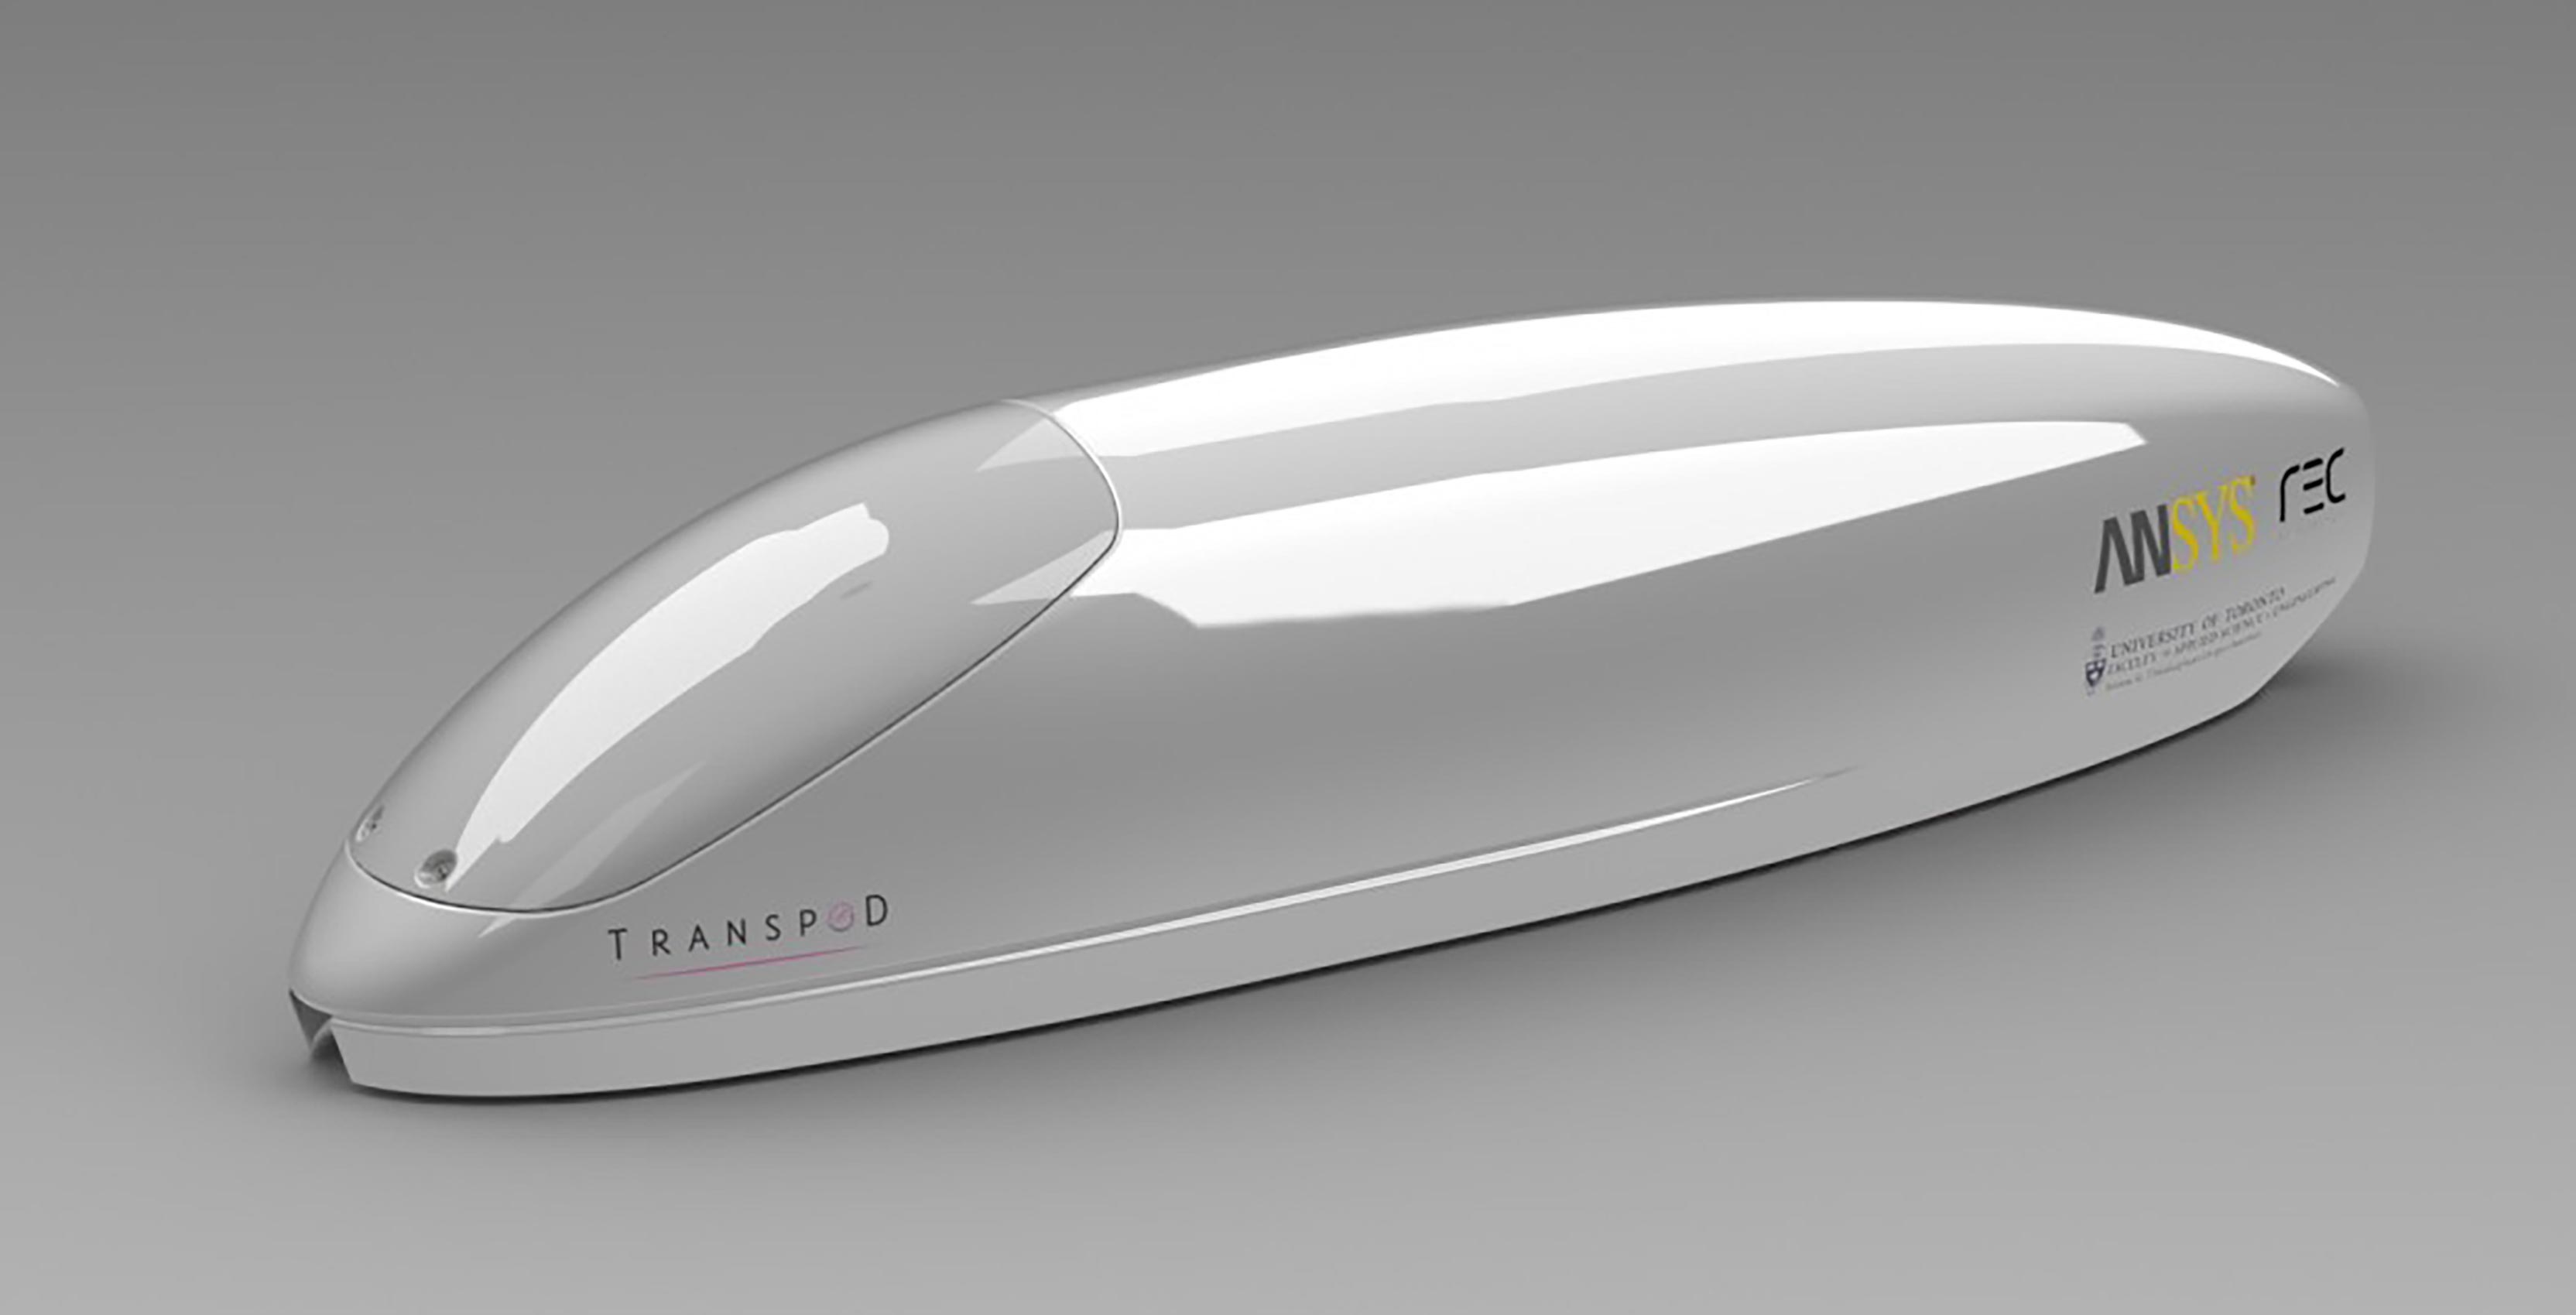 Transpod Hyperloop design